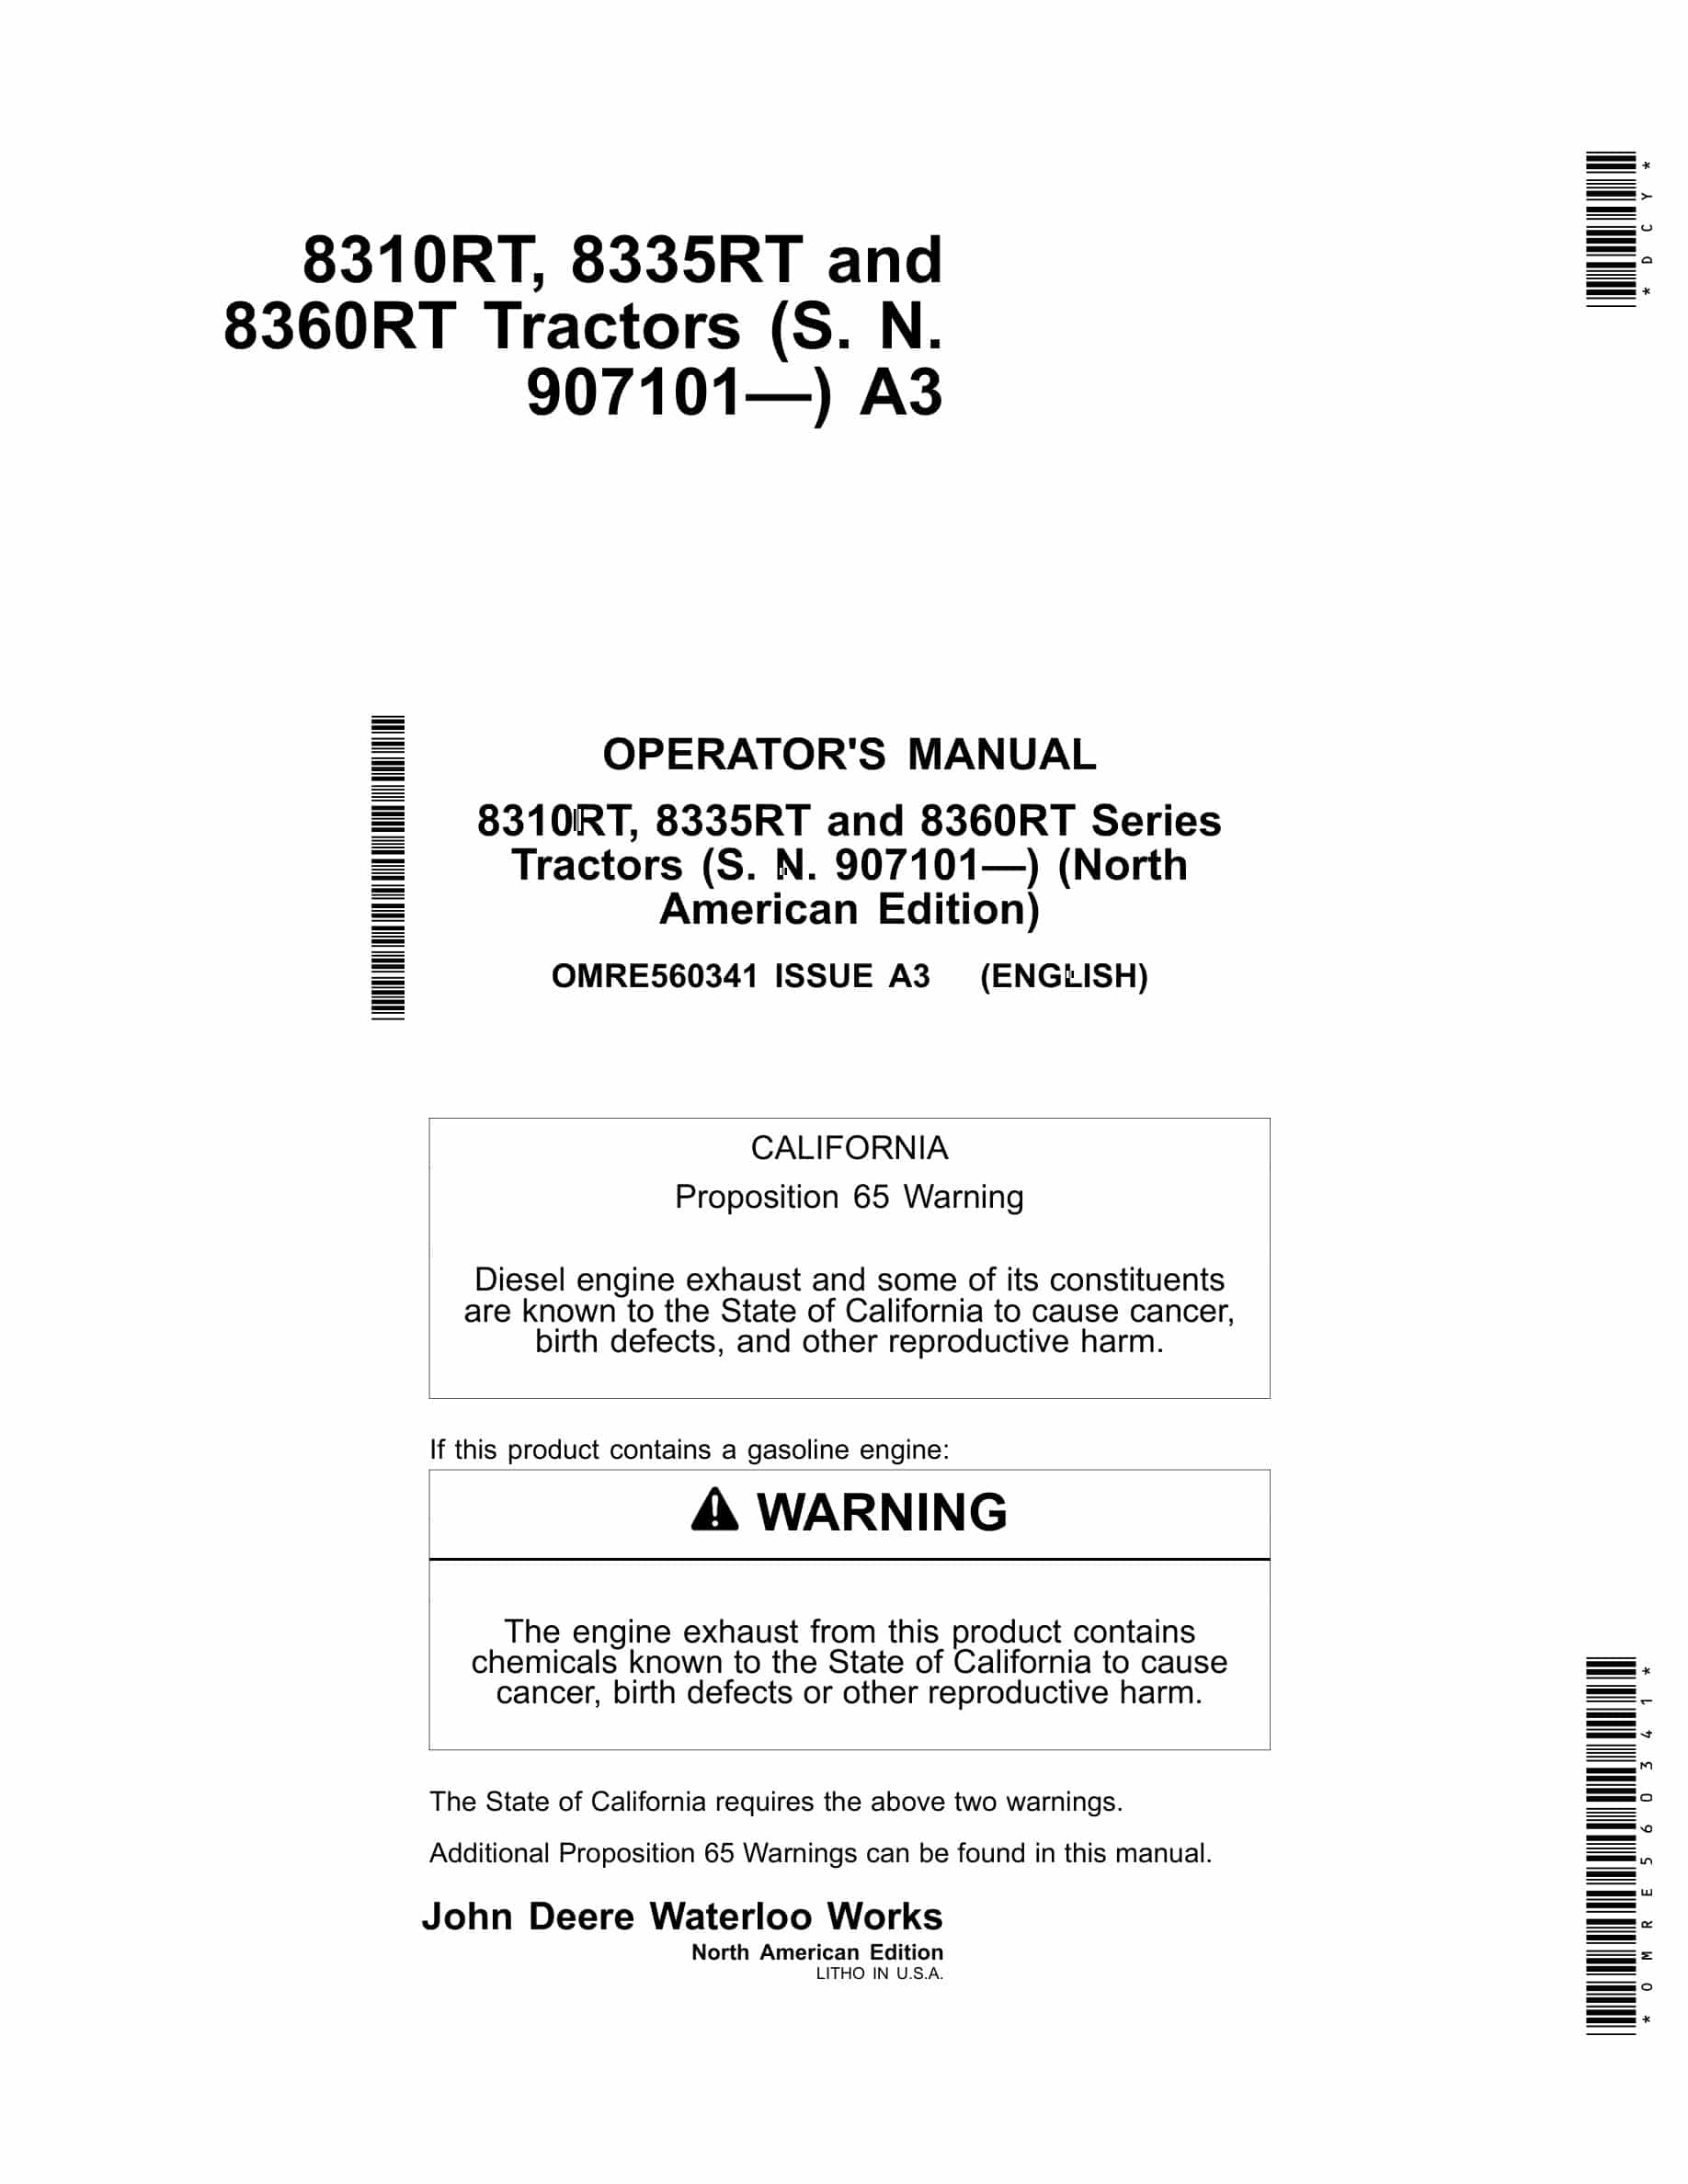 John Deere 8310RT, 8335RT and 8360RT Tractor Operator Manual OMRE560341-1